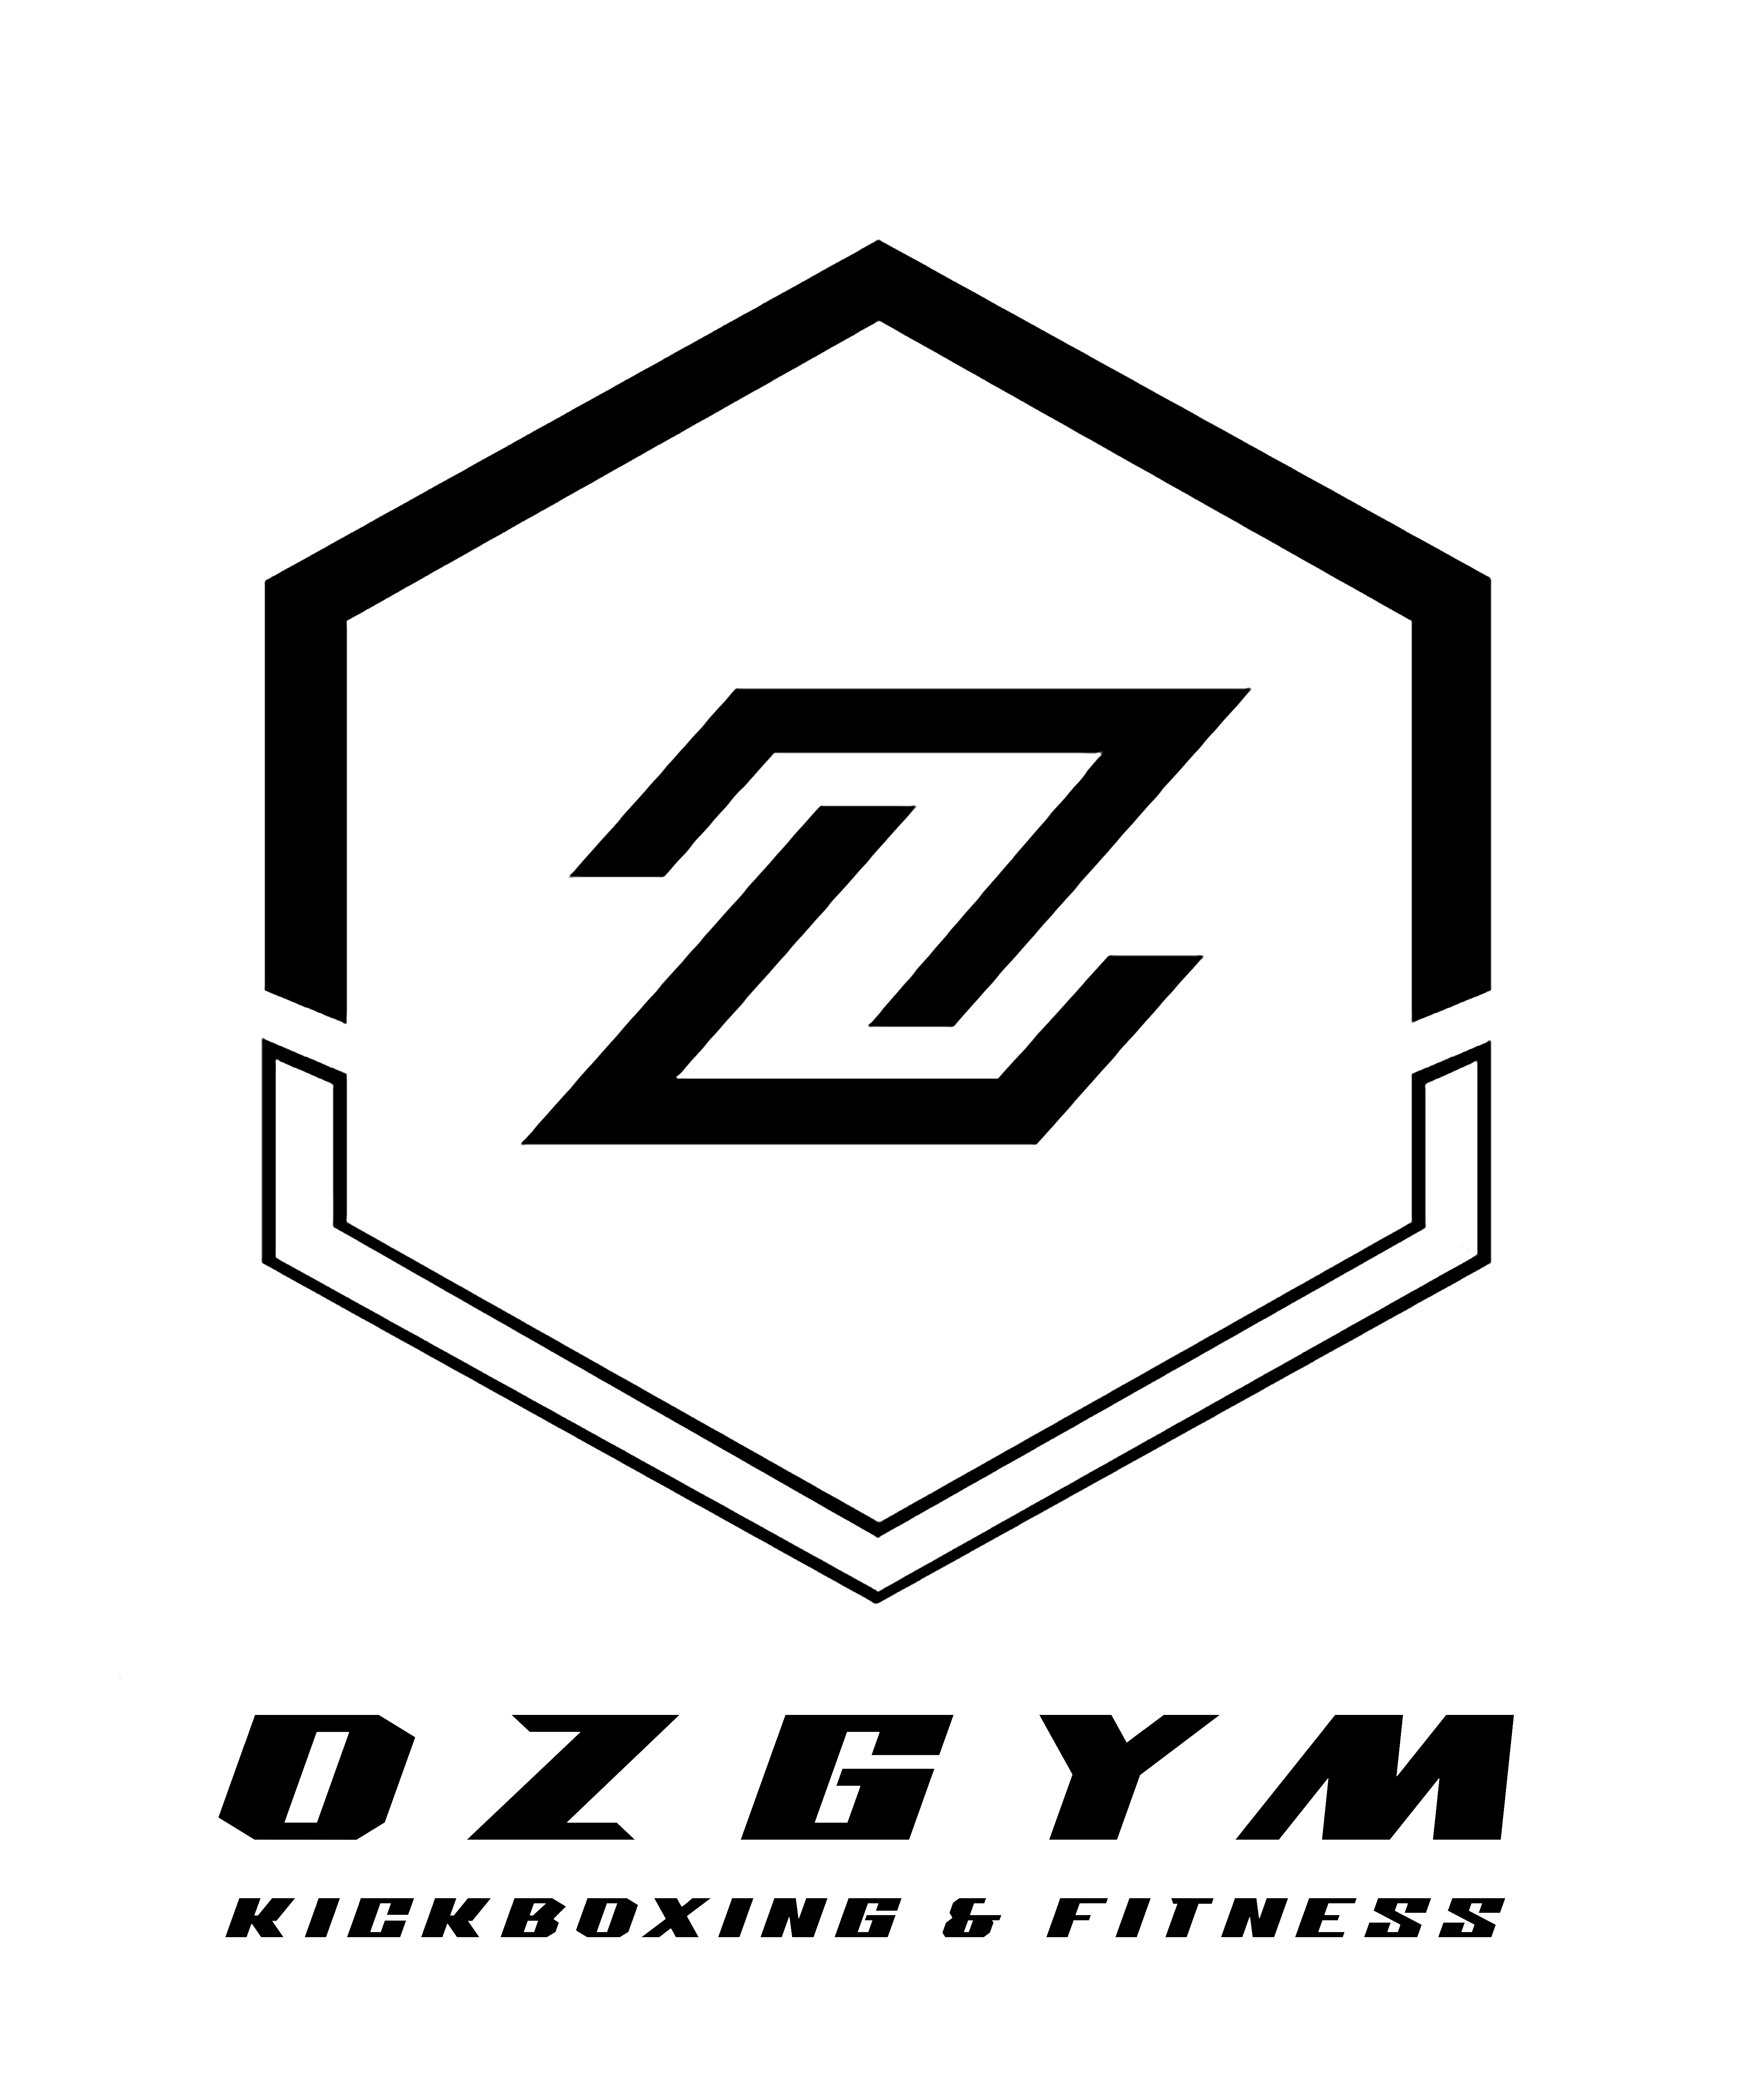 OZGYM kickboxing&fitness